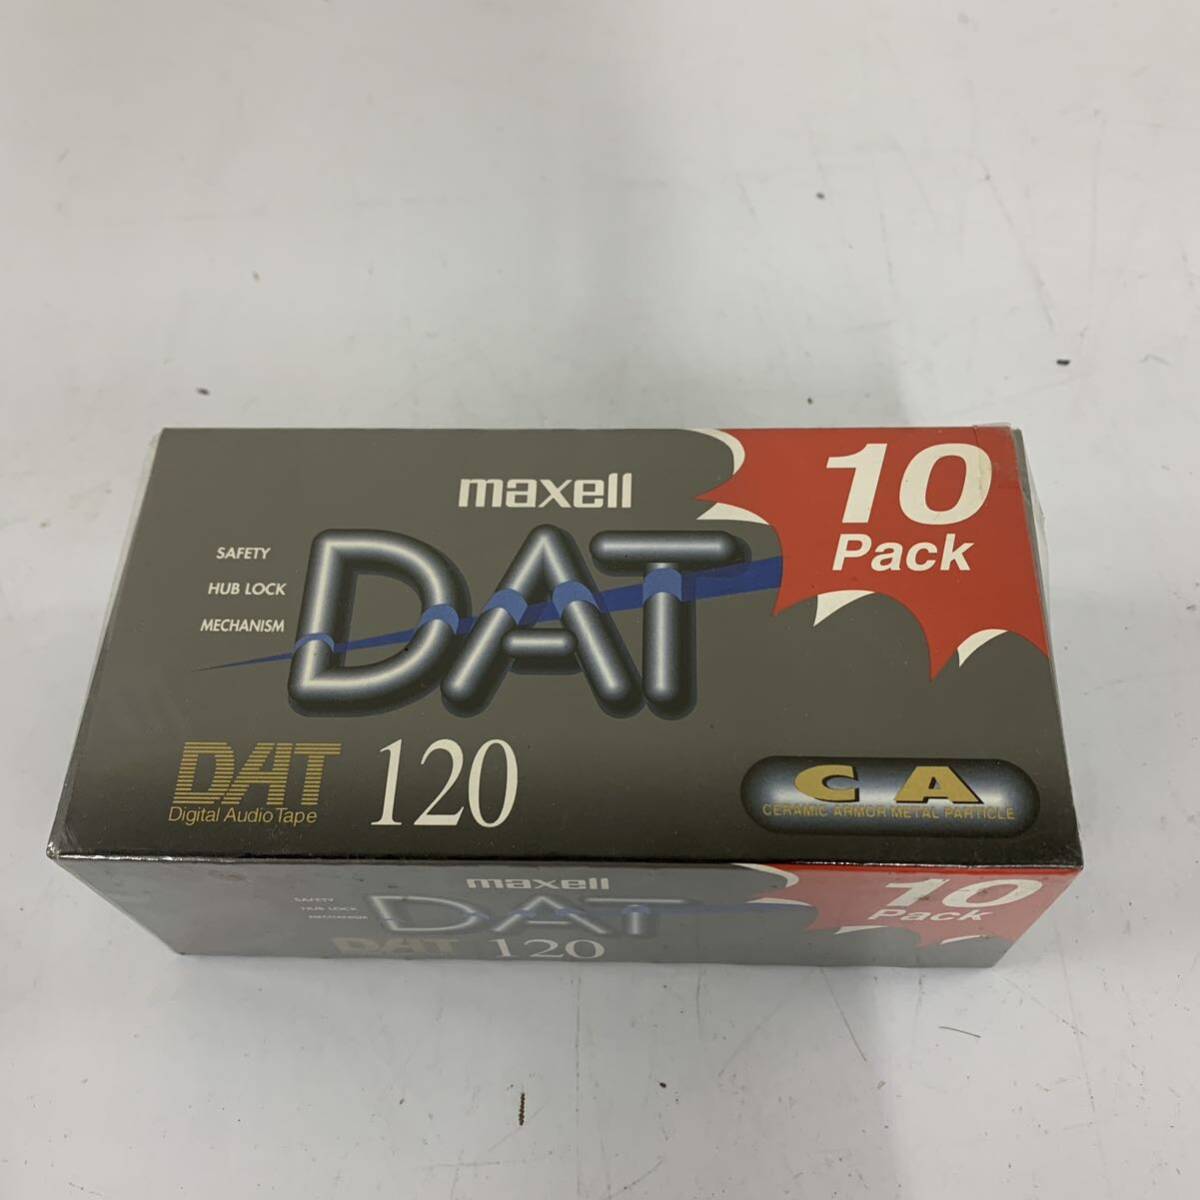 【A-2】 Maxell DAT 120 DATテープ 未開封 10本セット マクセル 希少 ダットテープ 1745-6の画像1